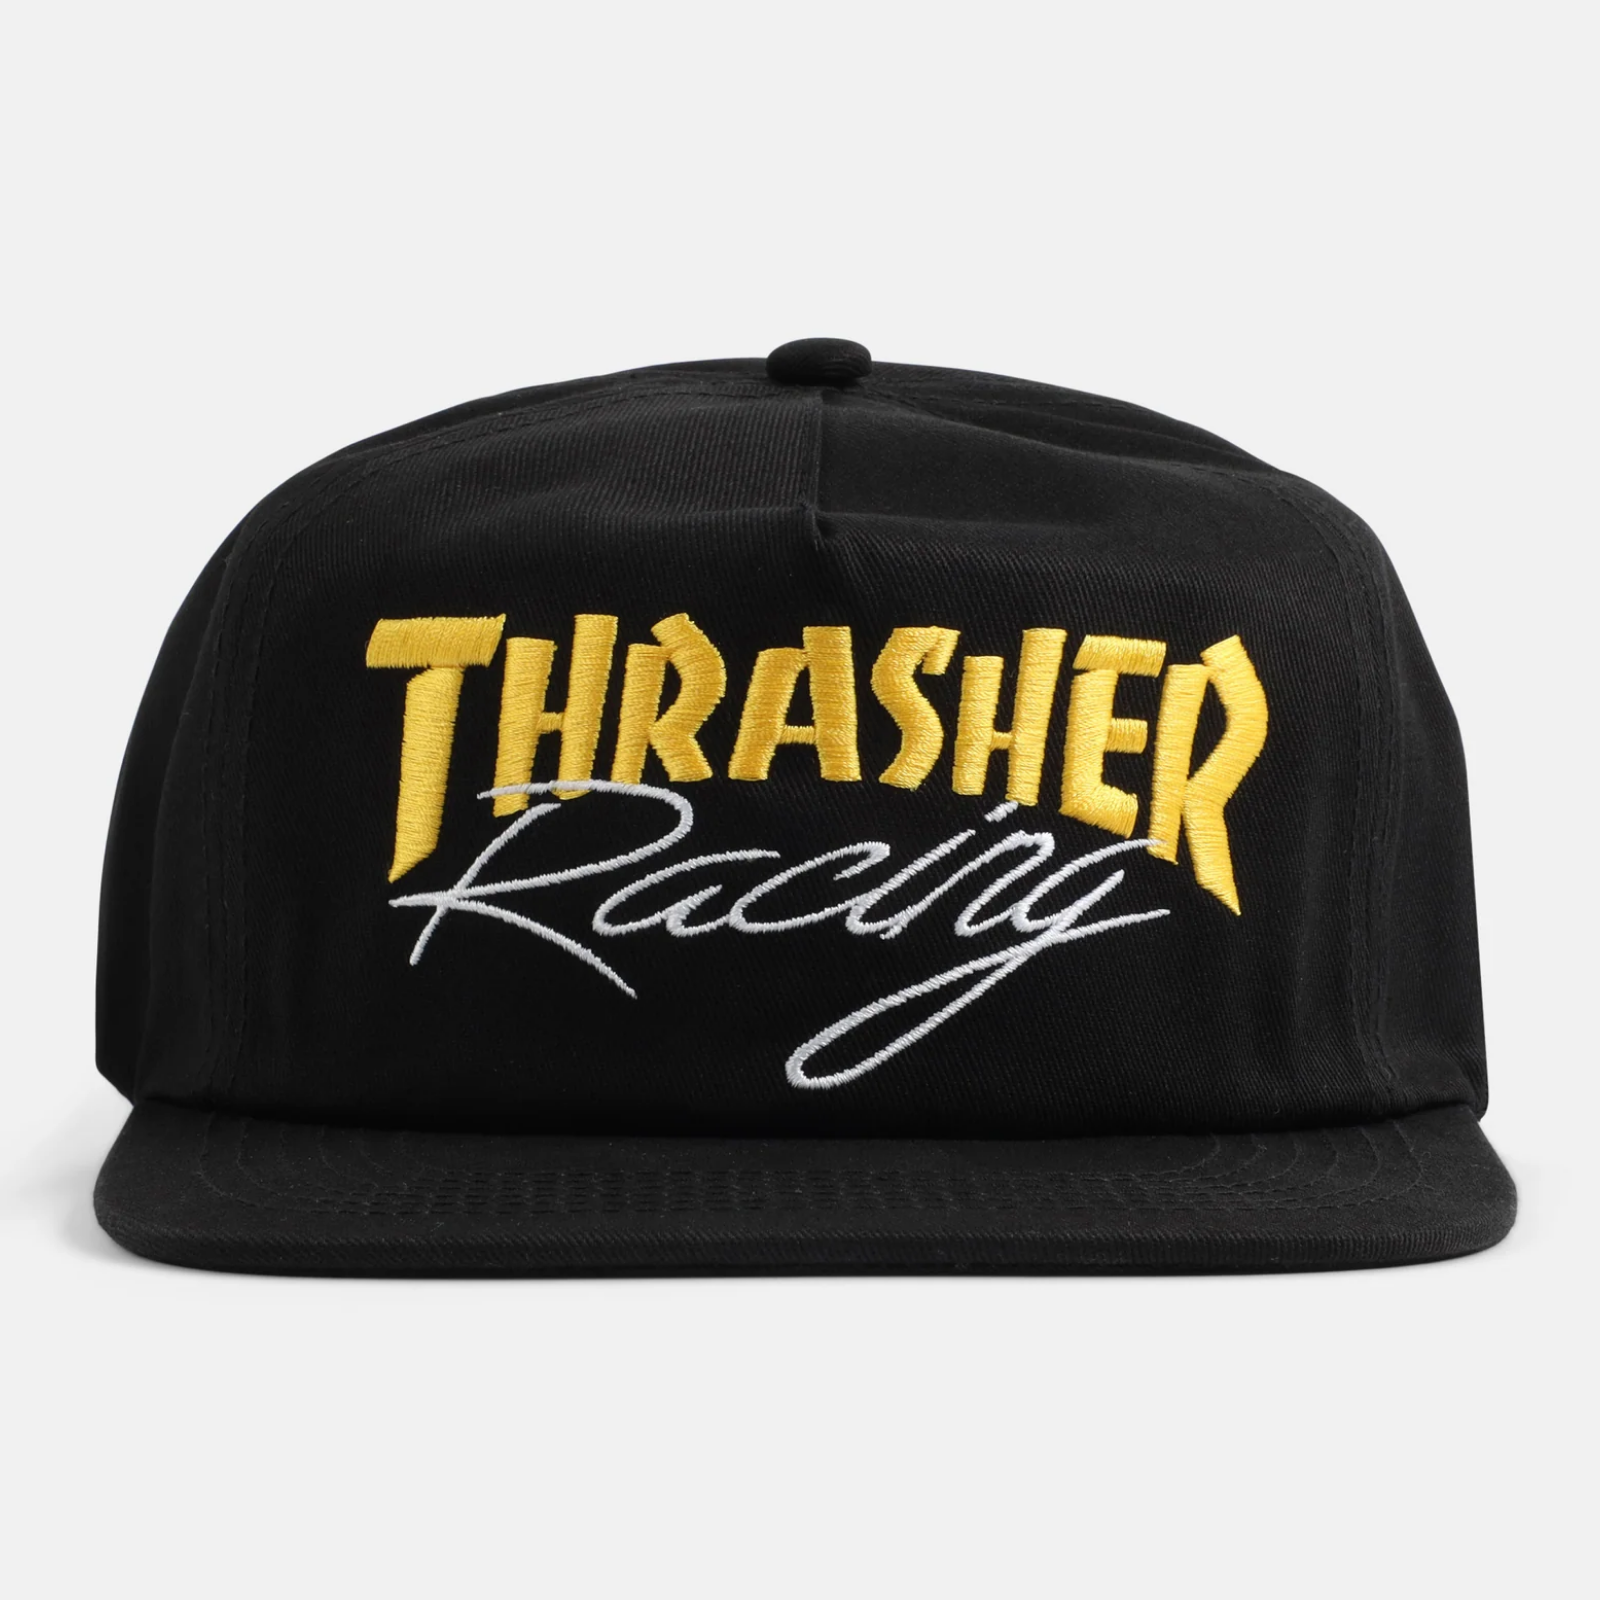 Thrasher Mag. Thrasher Racing Snapback Black/Yellow